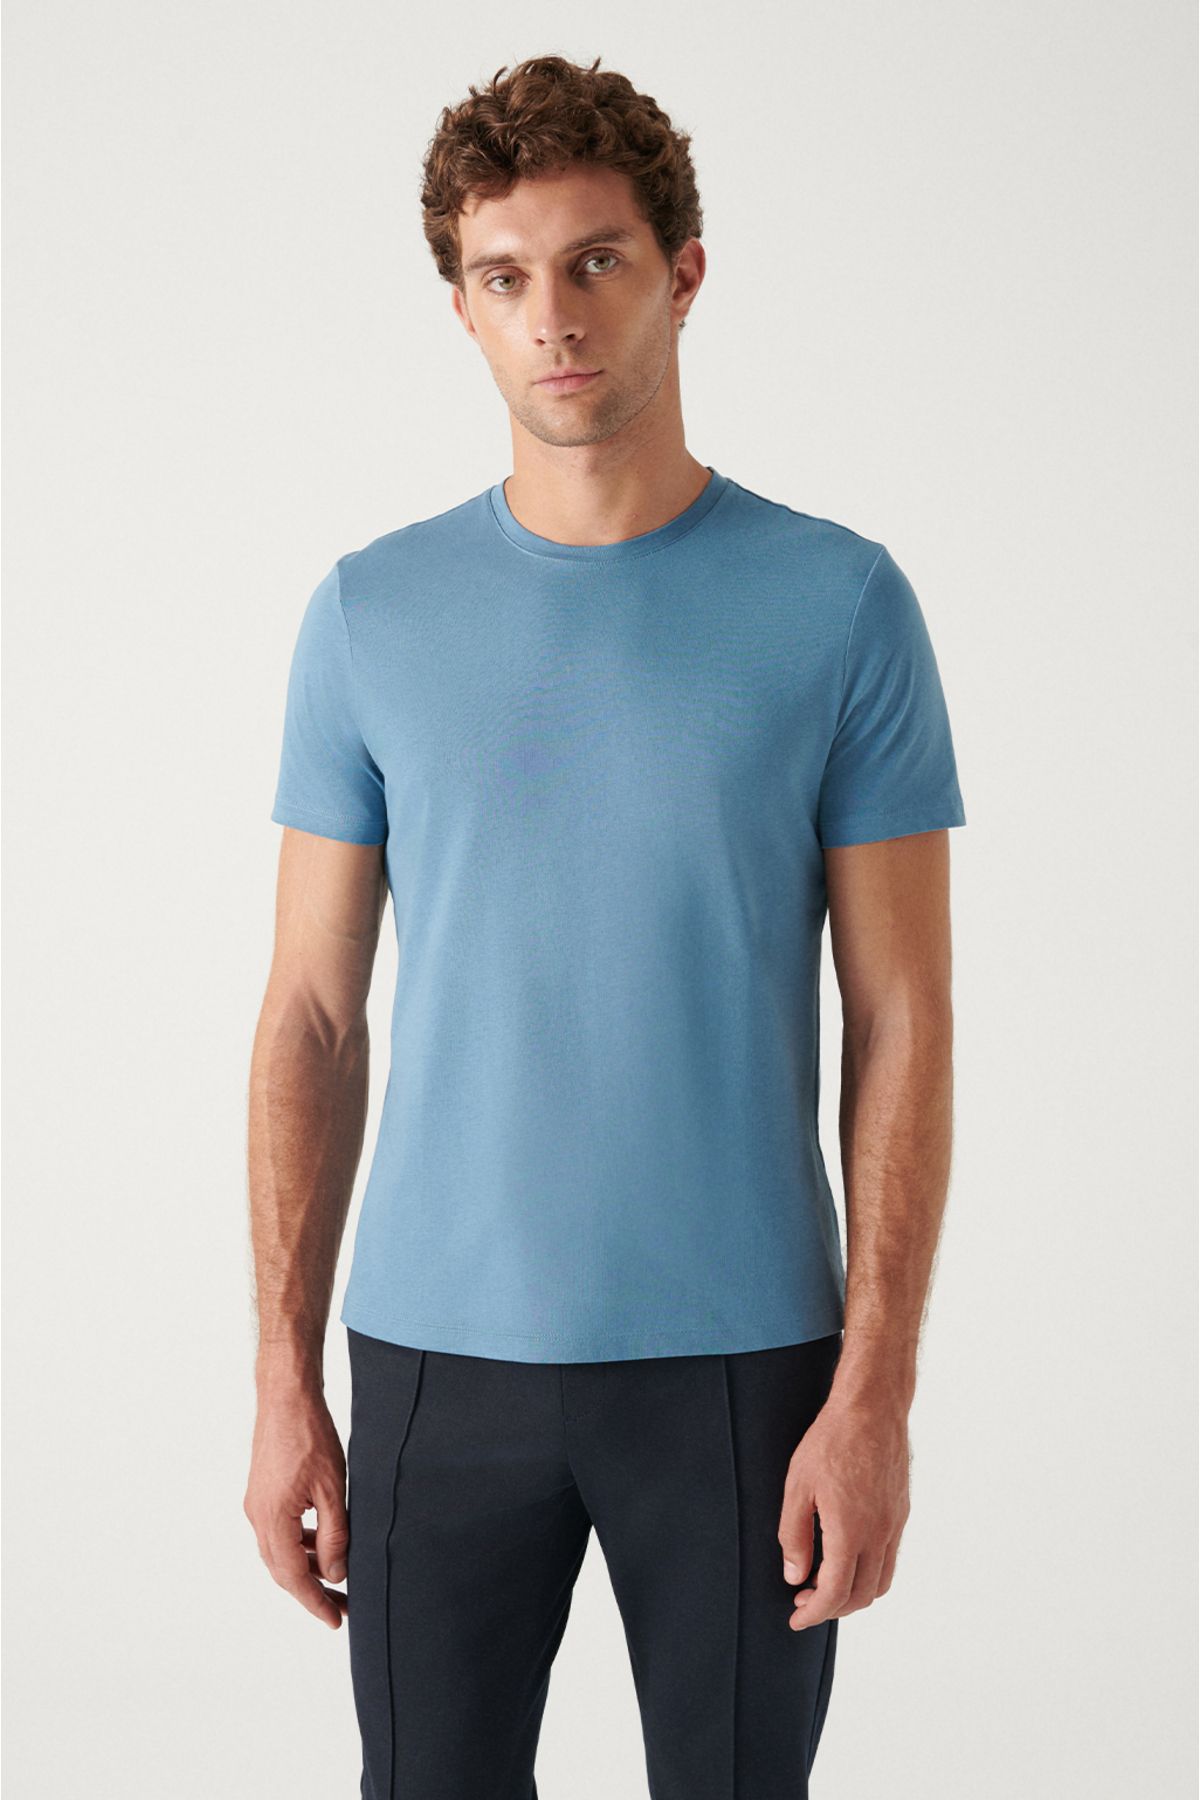 Avva تی شرت E001000 مردانه Indigo 100% پنبه تنفس پذیر یقه خدمه با تناسب استاندارد